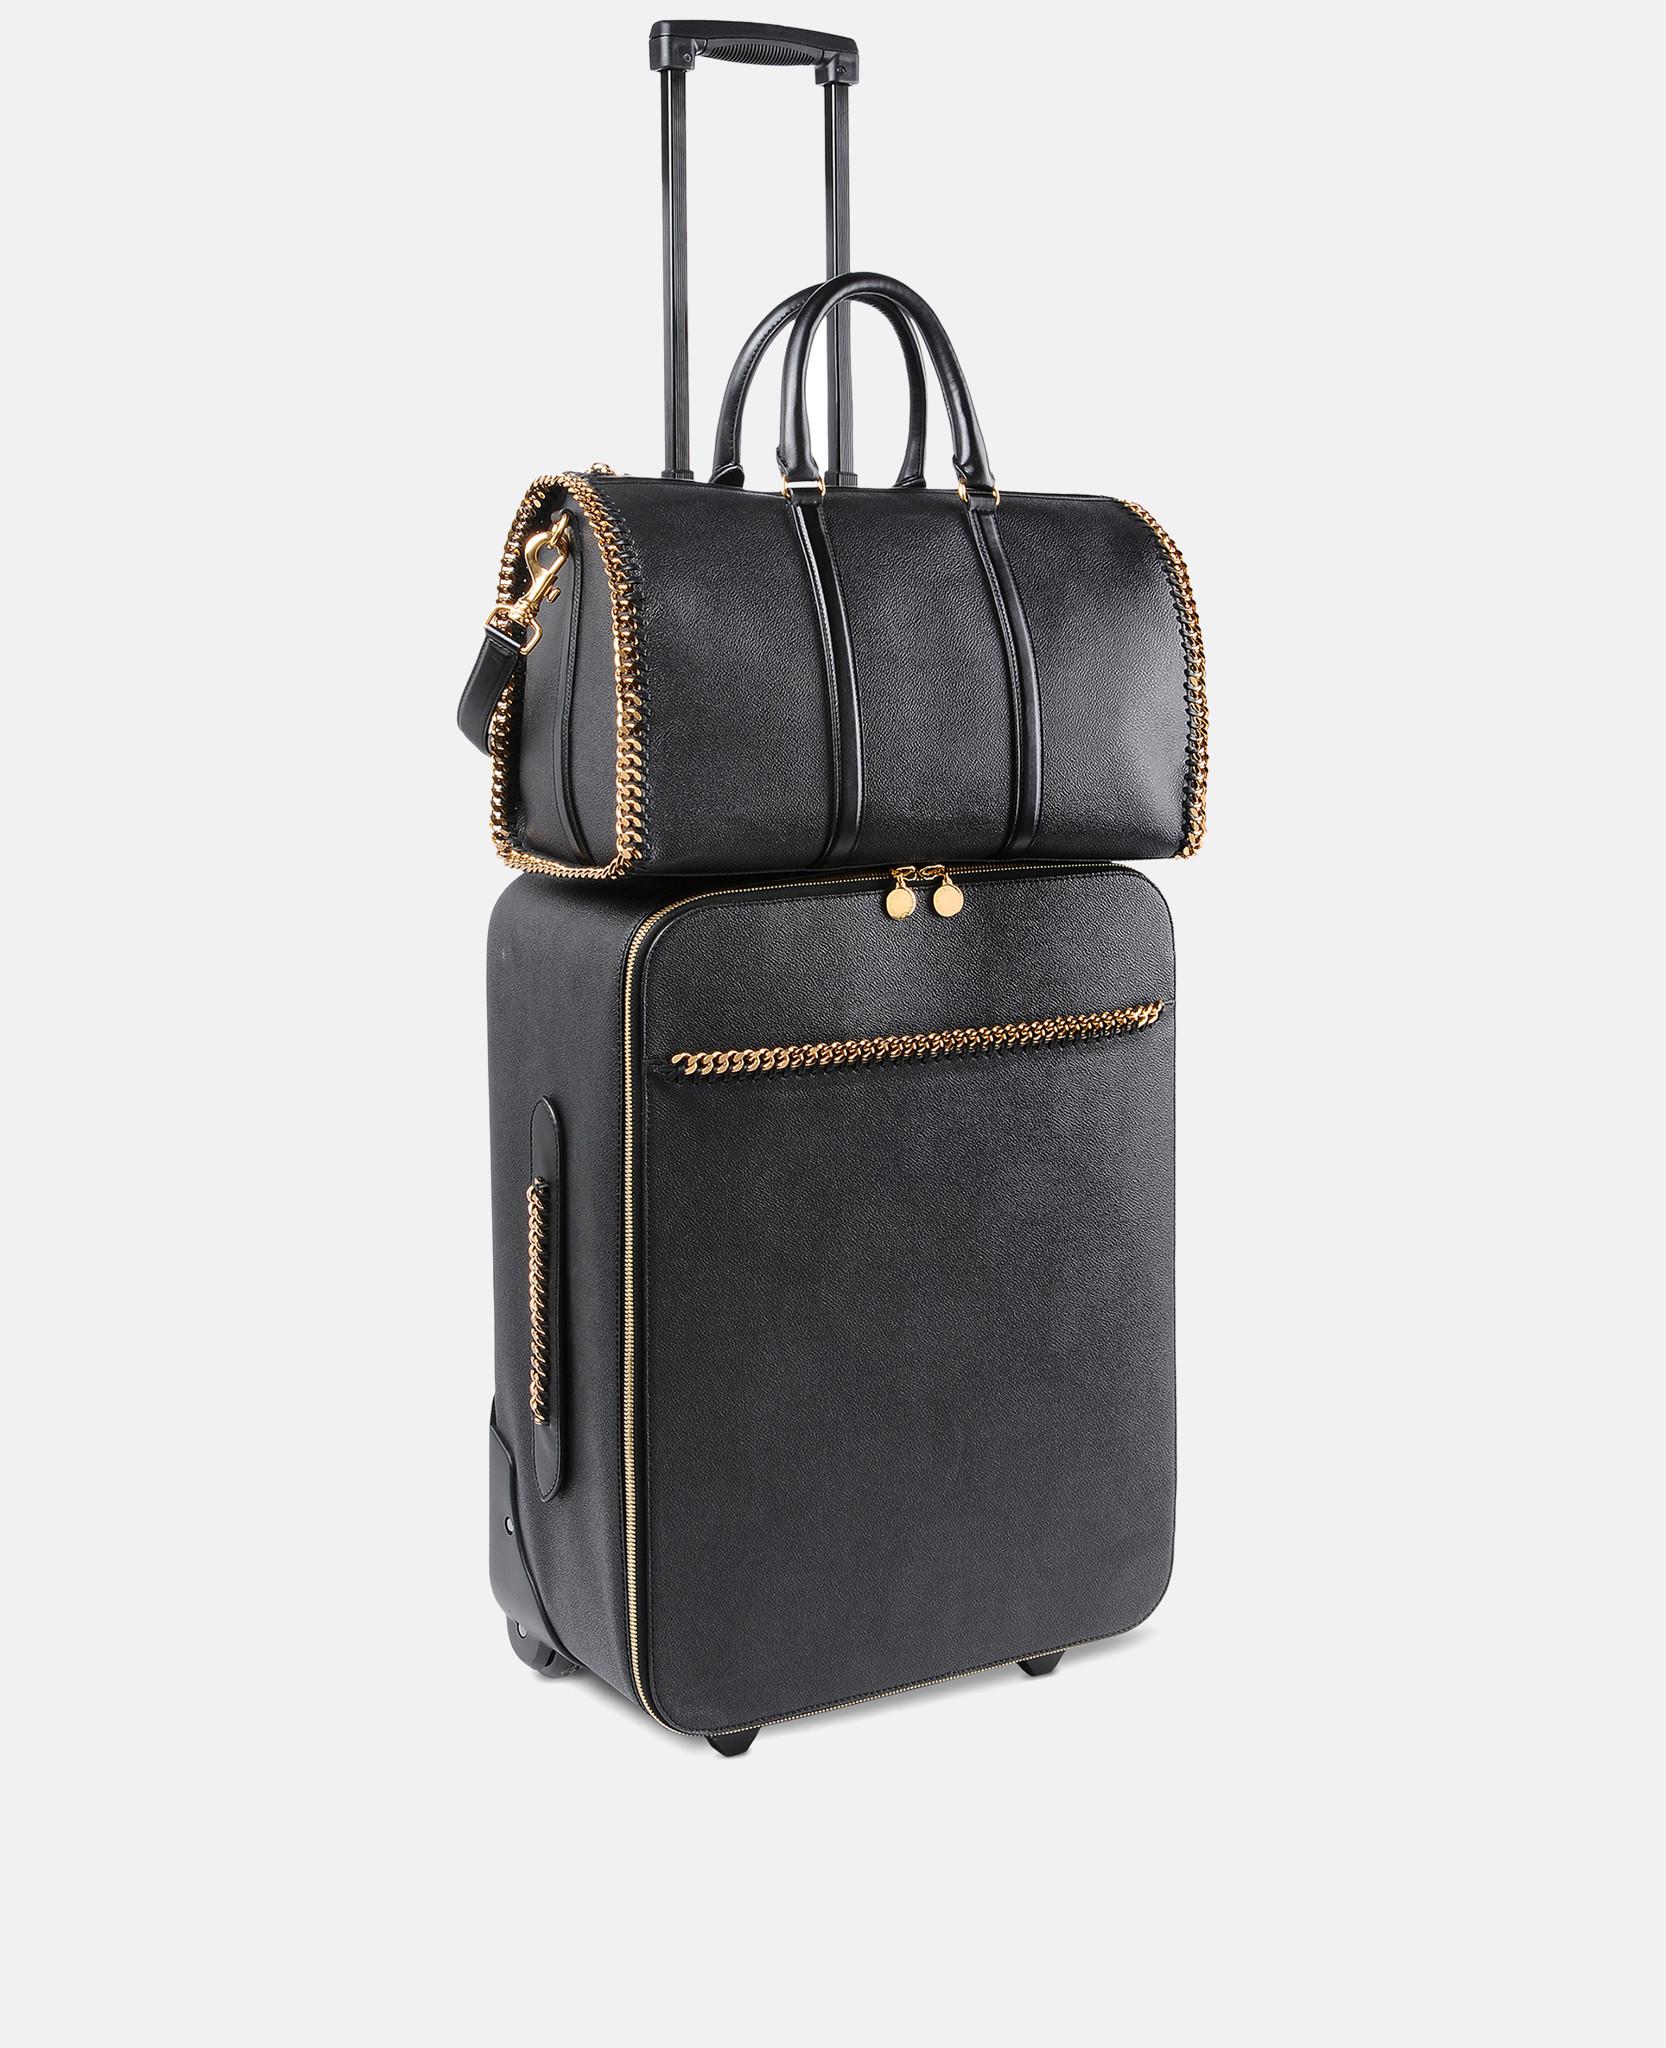 Stella McCartney Leather Falabella Travel Bag in Black | Lyst